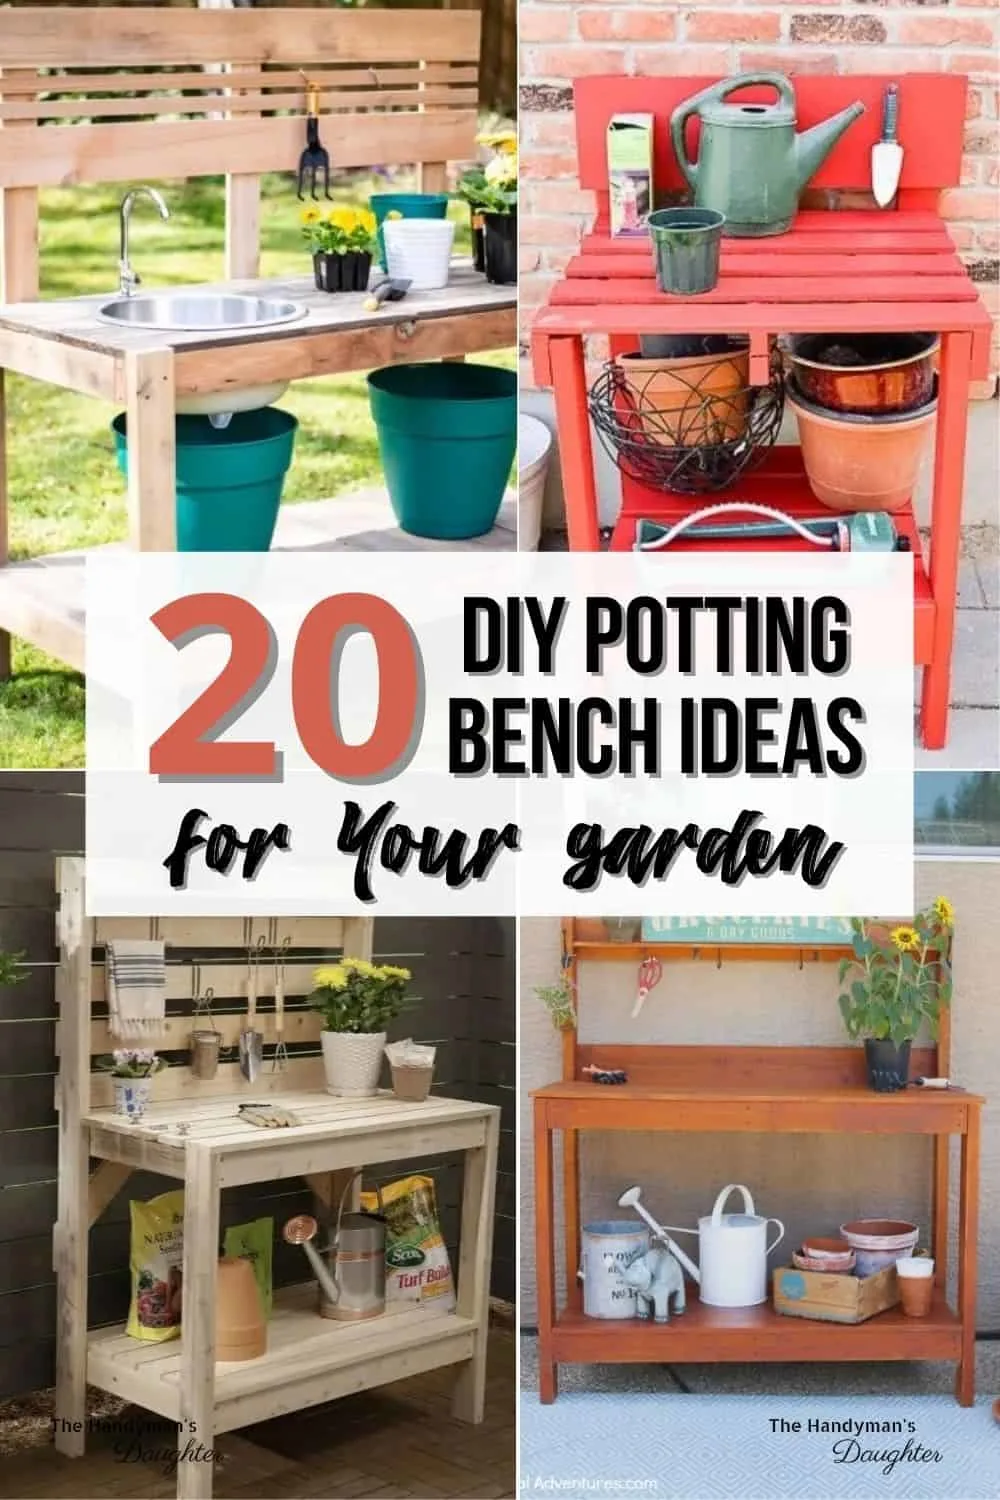 Diy Potting Bench Ideas For Your Garden, How To Make A Garden Potting Table